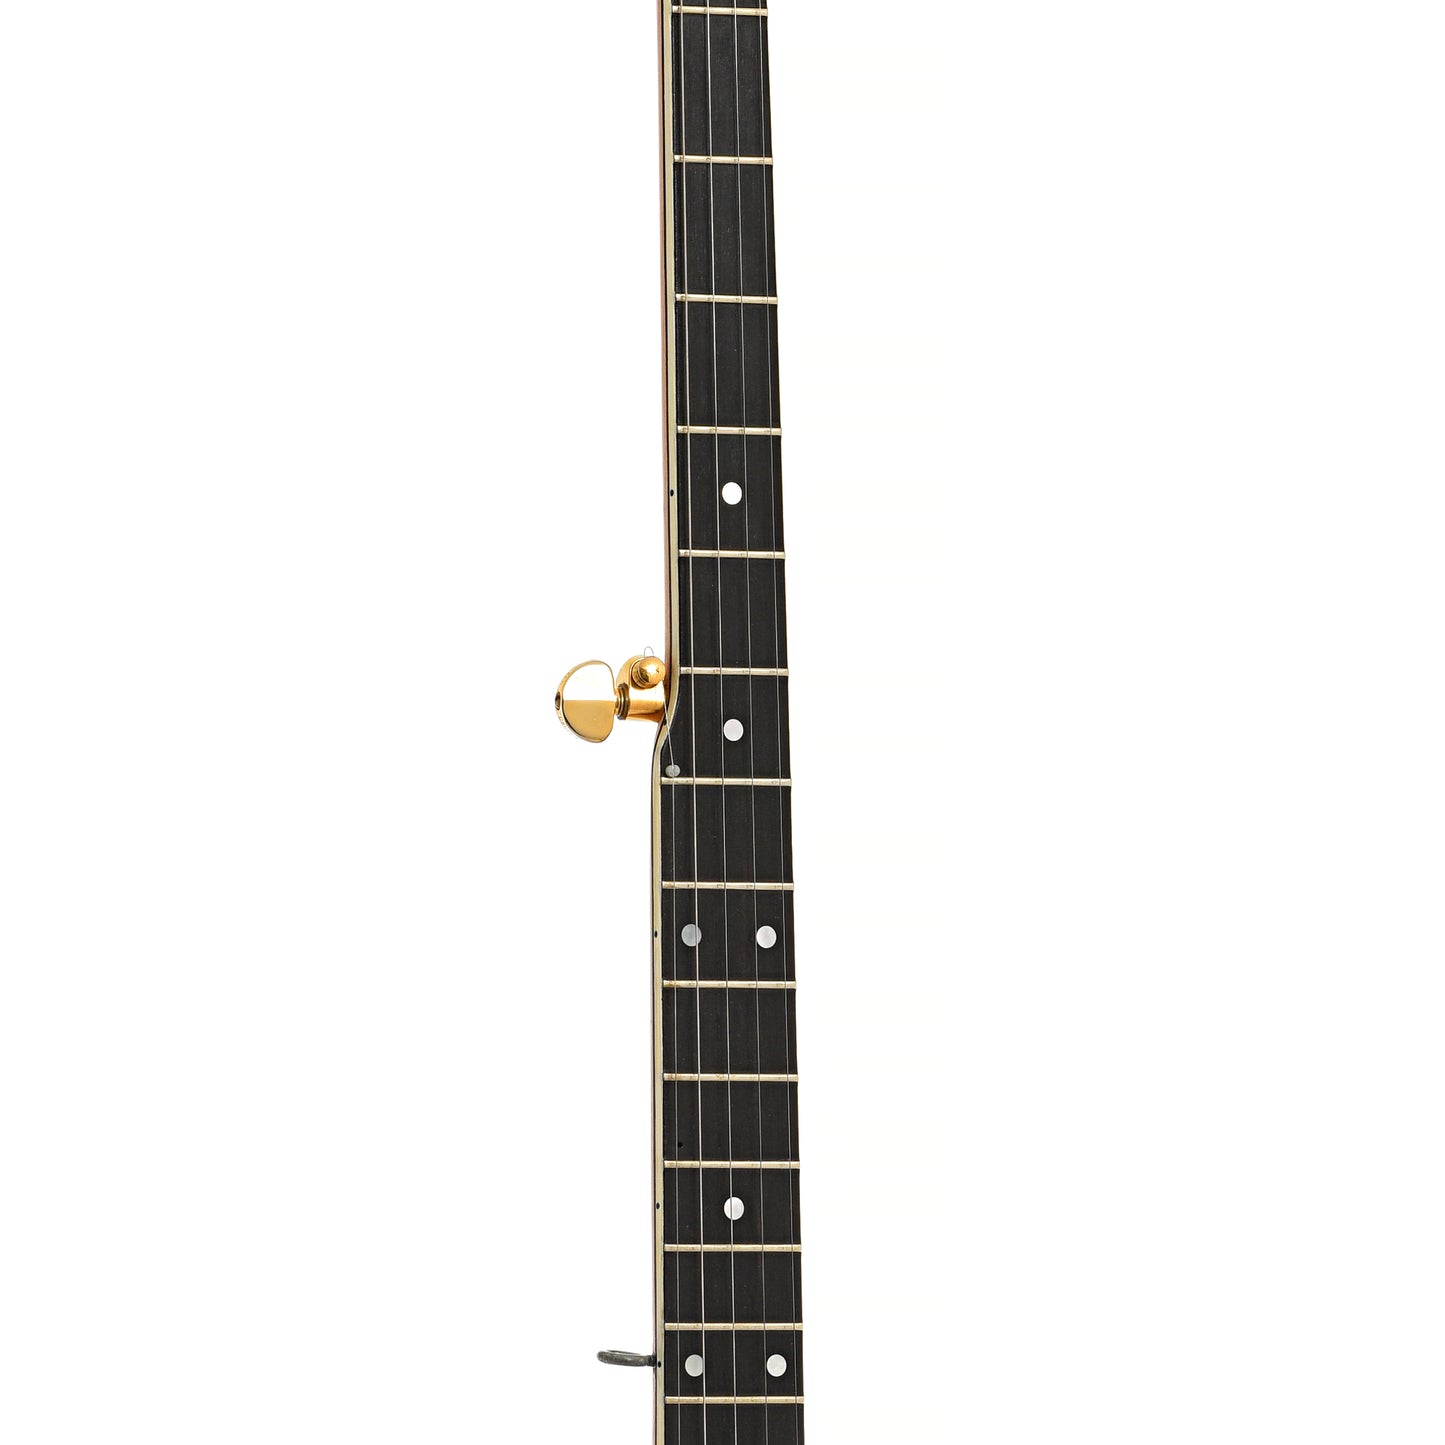 Fretboard of Vega Pete Seeger Extra Long Neck Banjo